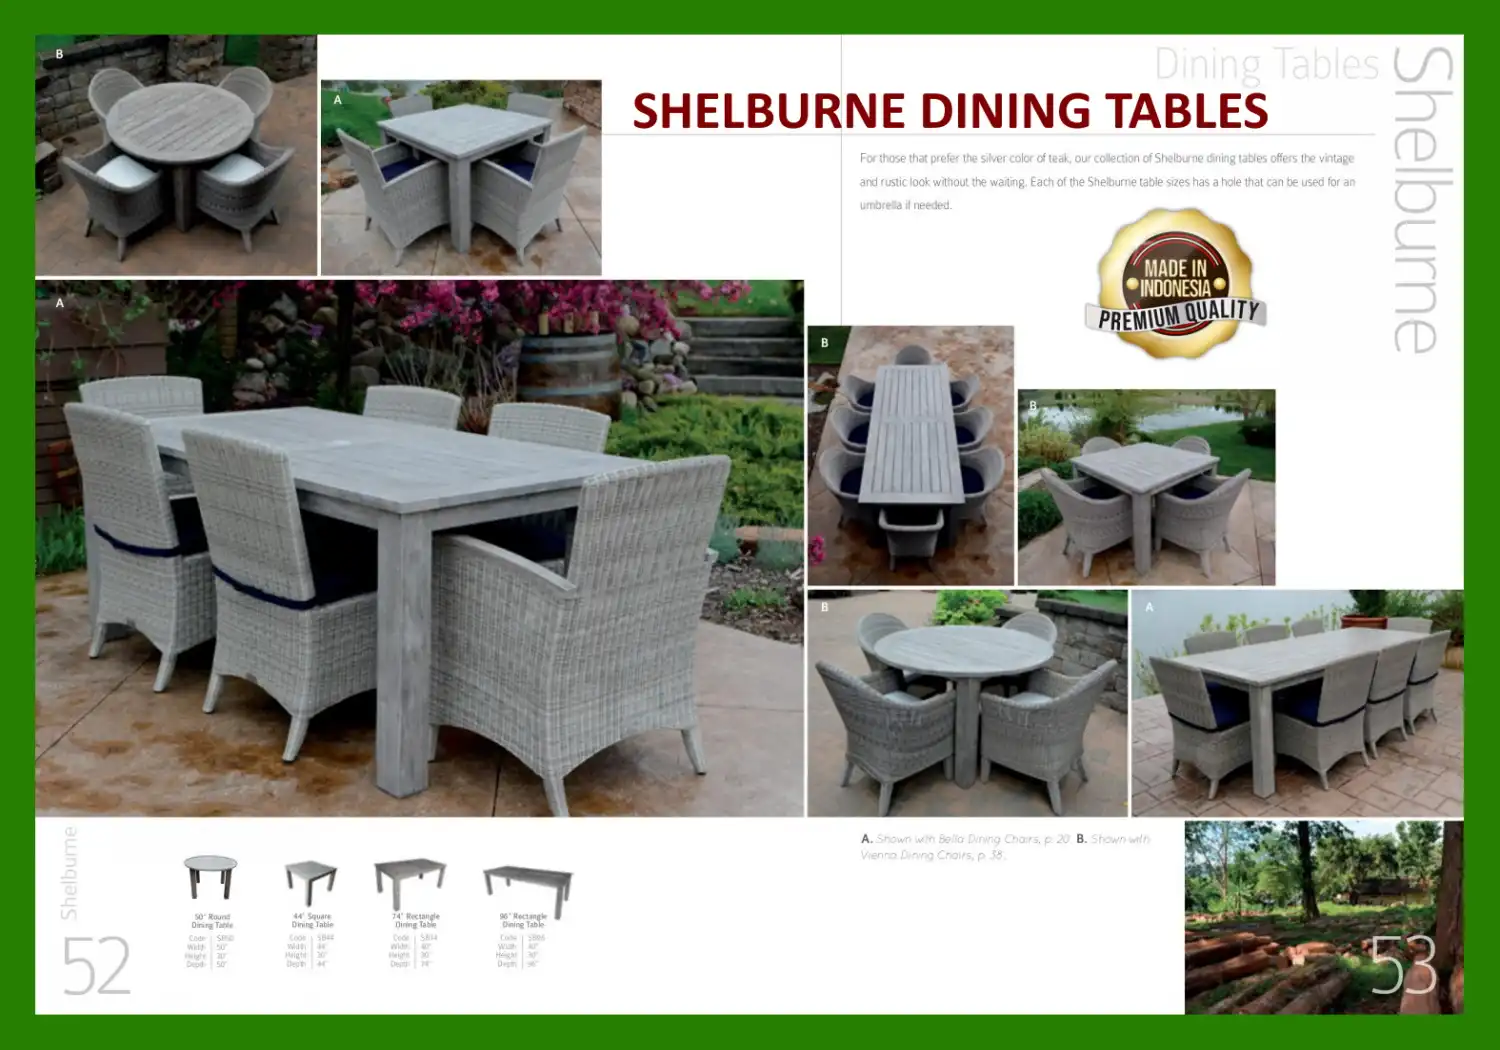 SHELBURNE DINING TABLES